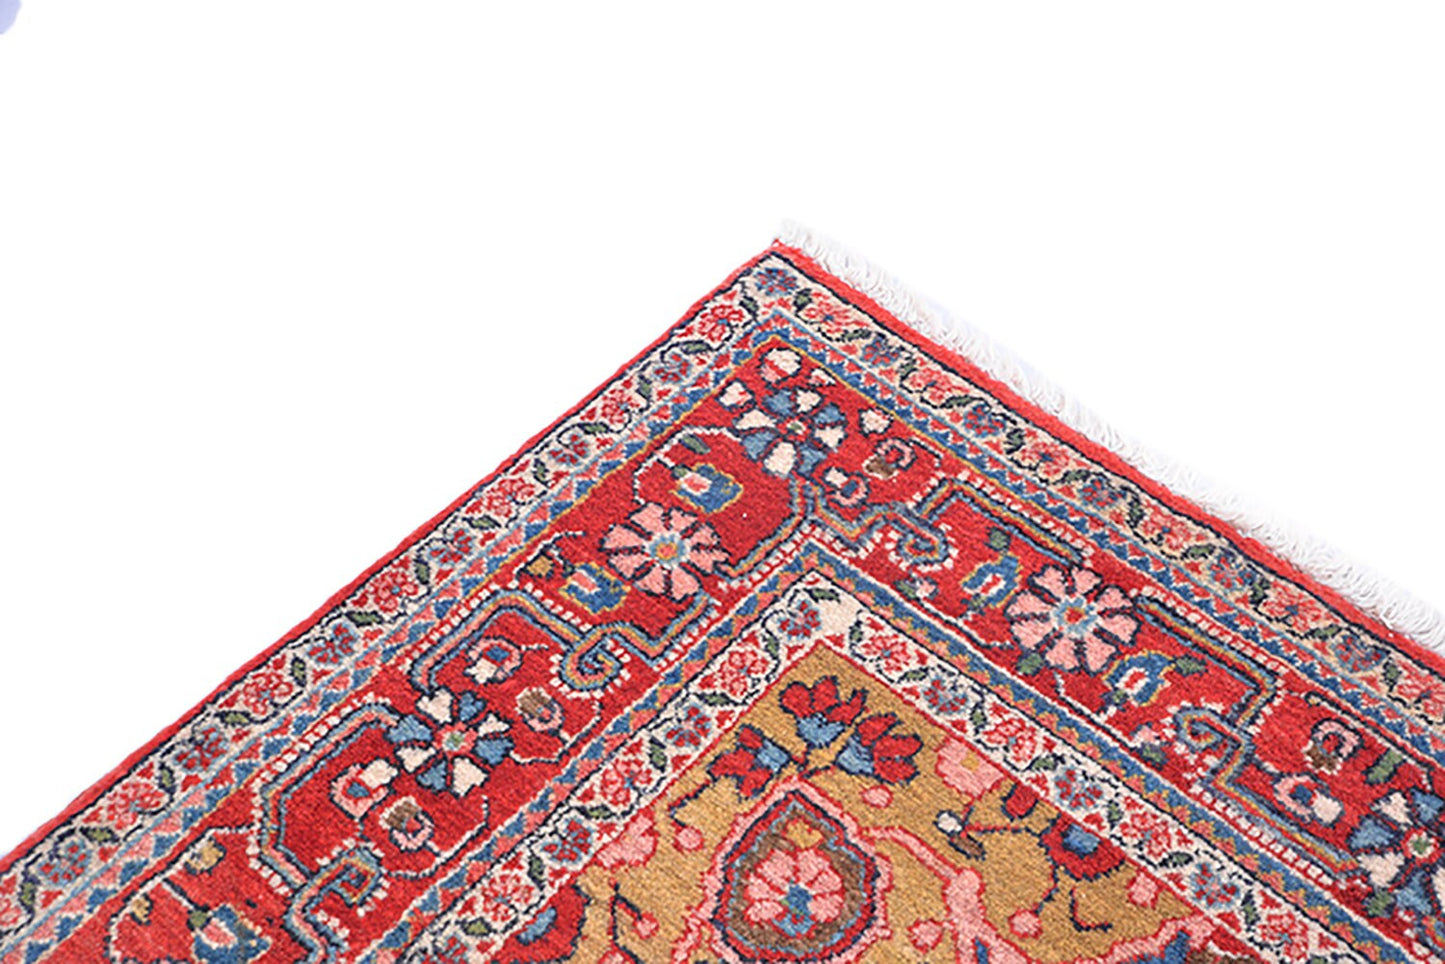 6.10 x 4.3 Feet | Vintage Pink Rug | Bright Medallion Rug | Floral Persian Design Rug | Pink Blue Yelllow Rug | Handwoven Wool Rug